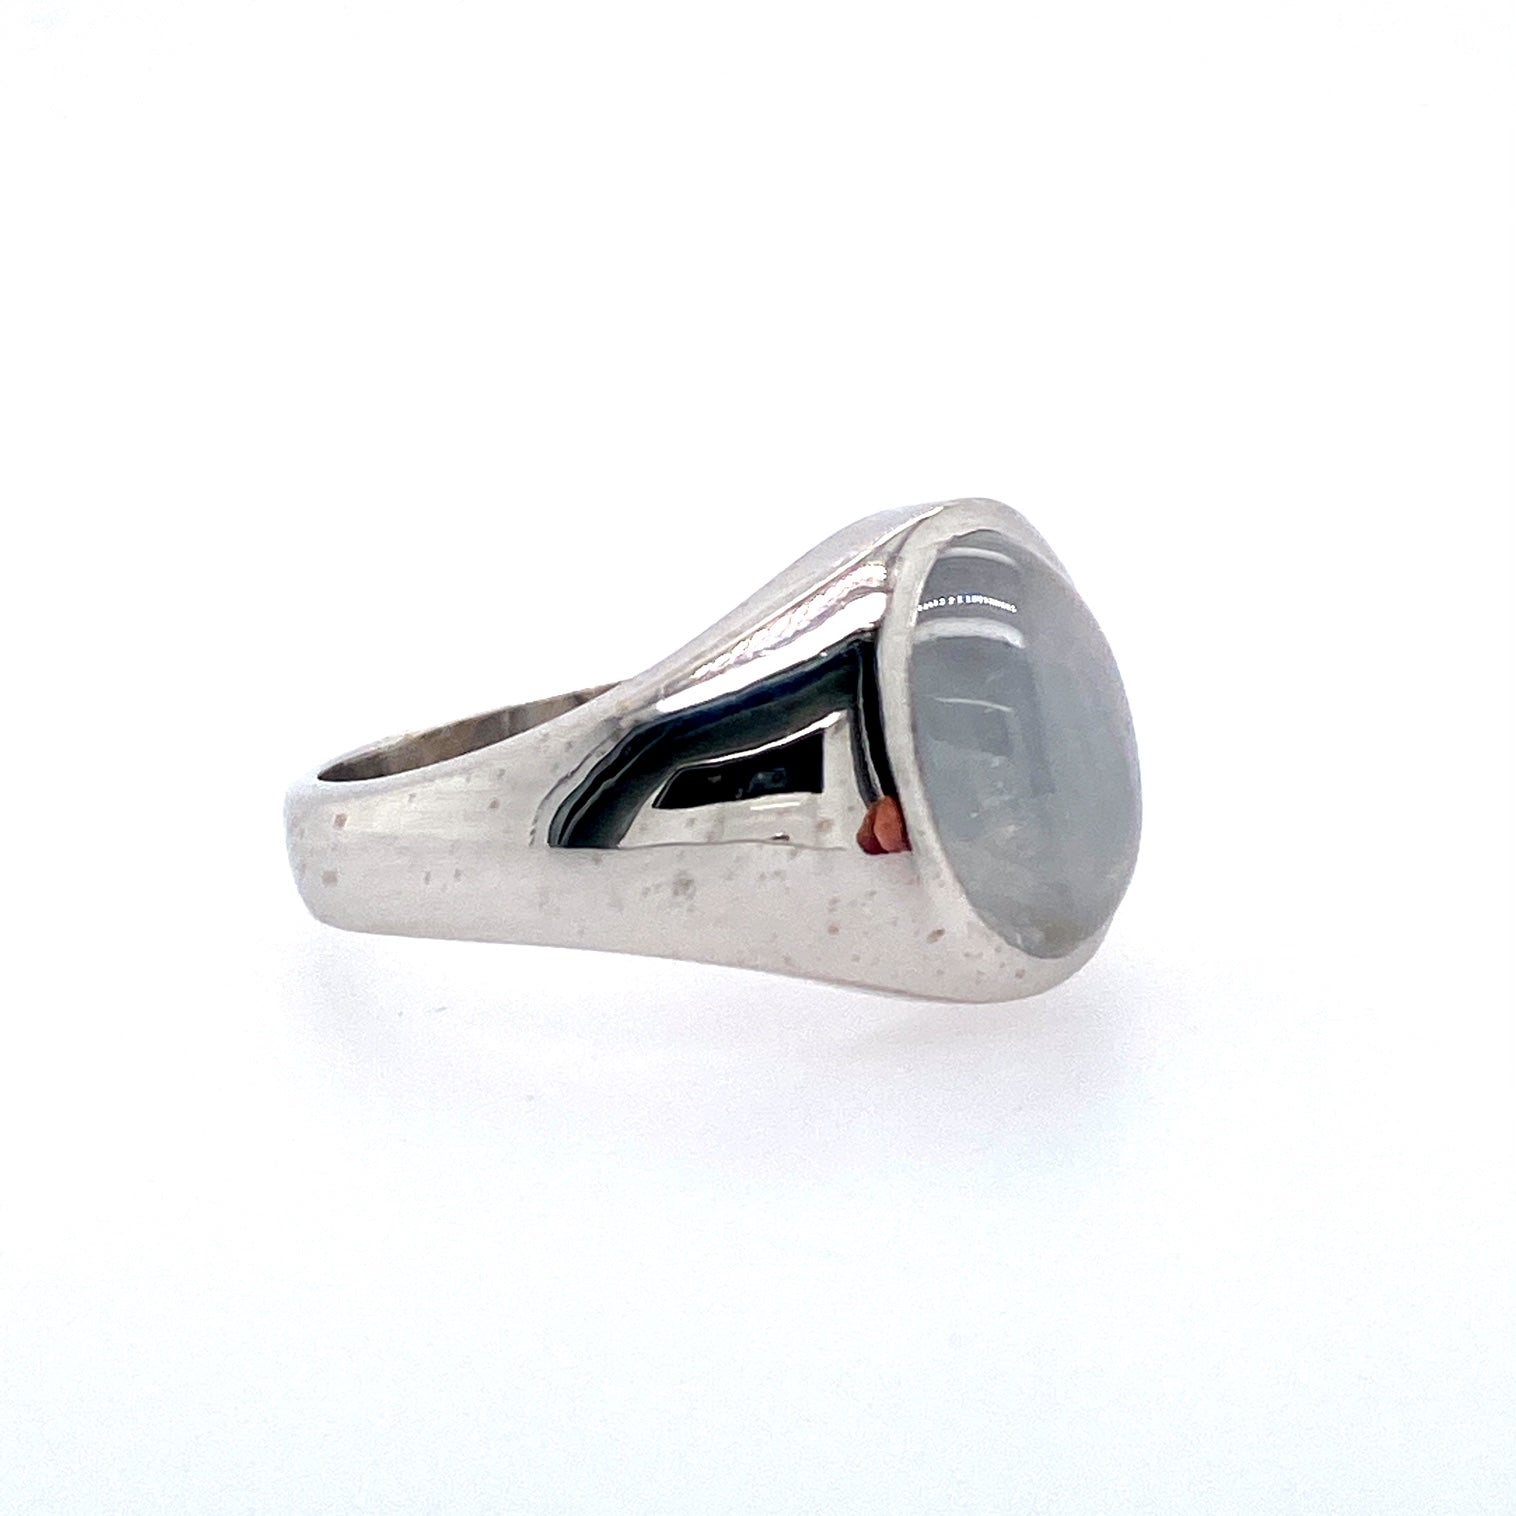 Handmade Diamond And Sapphire Ring In Platinum - Plante Jewelers